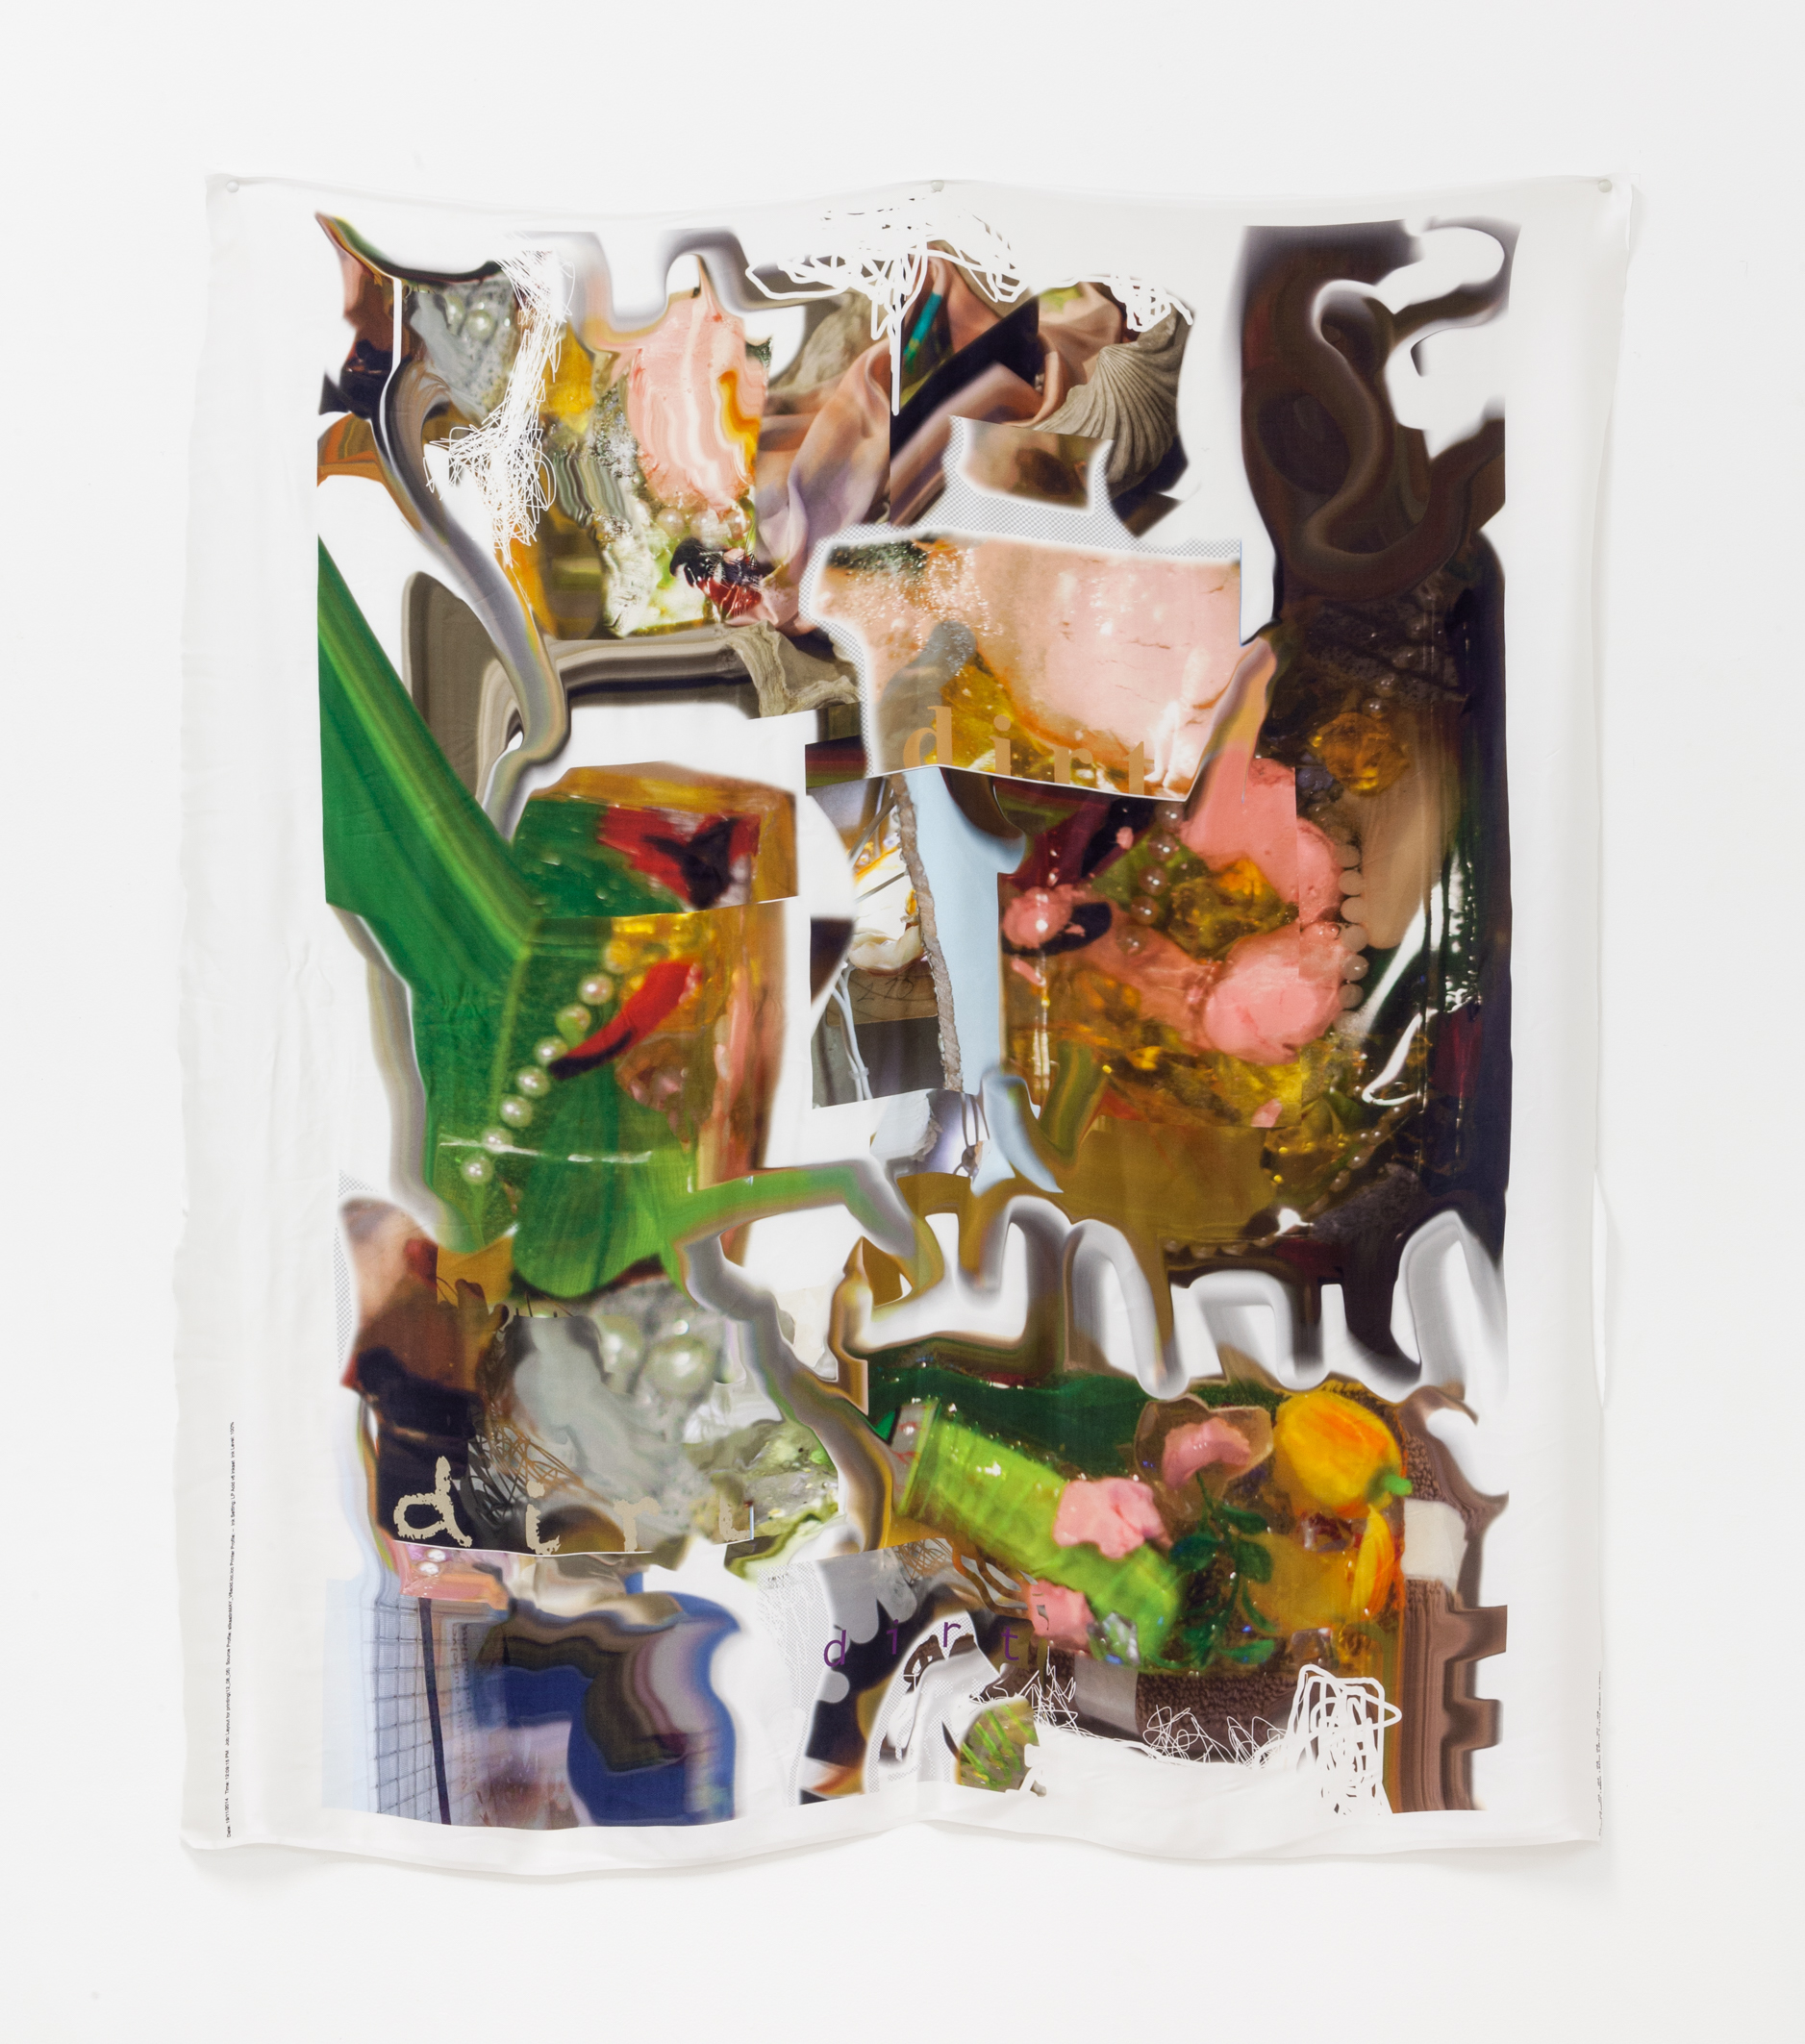 Marian Tubbs, “dirt”, 2014, digital print on silk, 100 × 135 mm